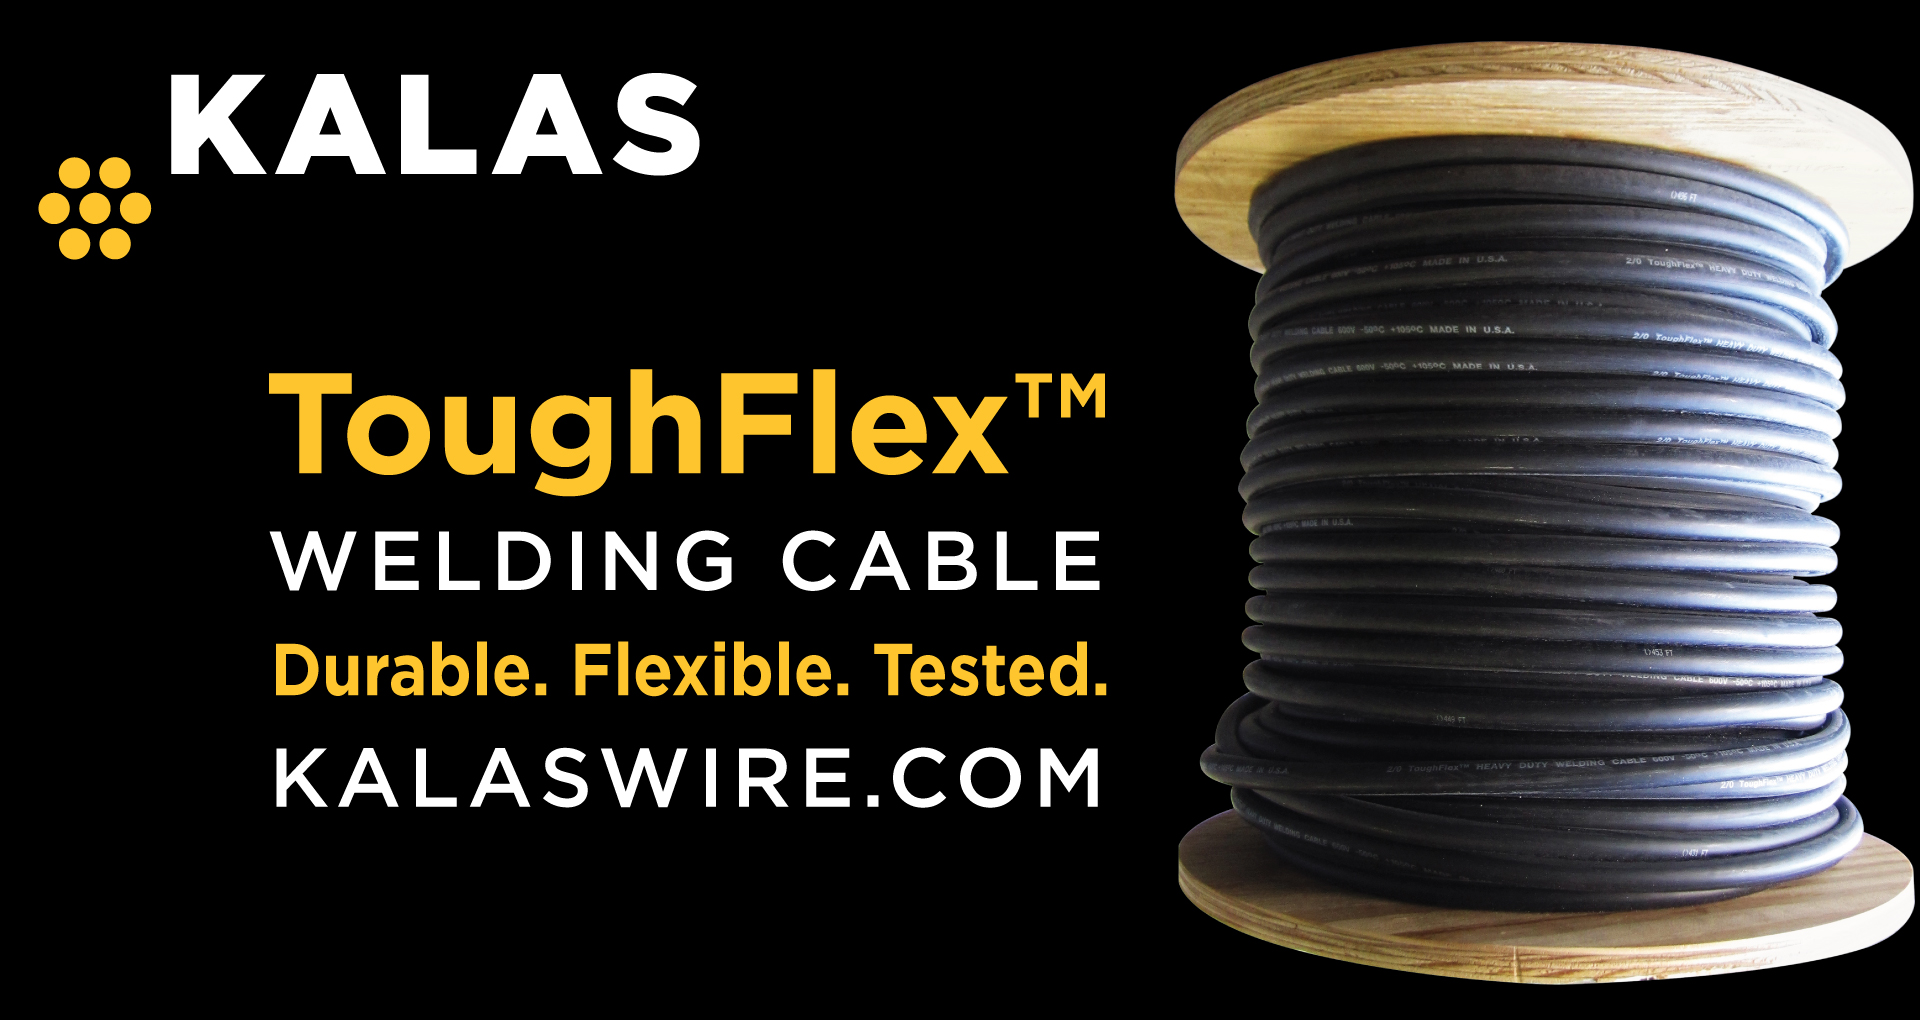 ToughFlex™ Kalas Welding Cable is Industry's Best